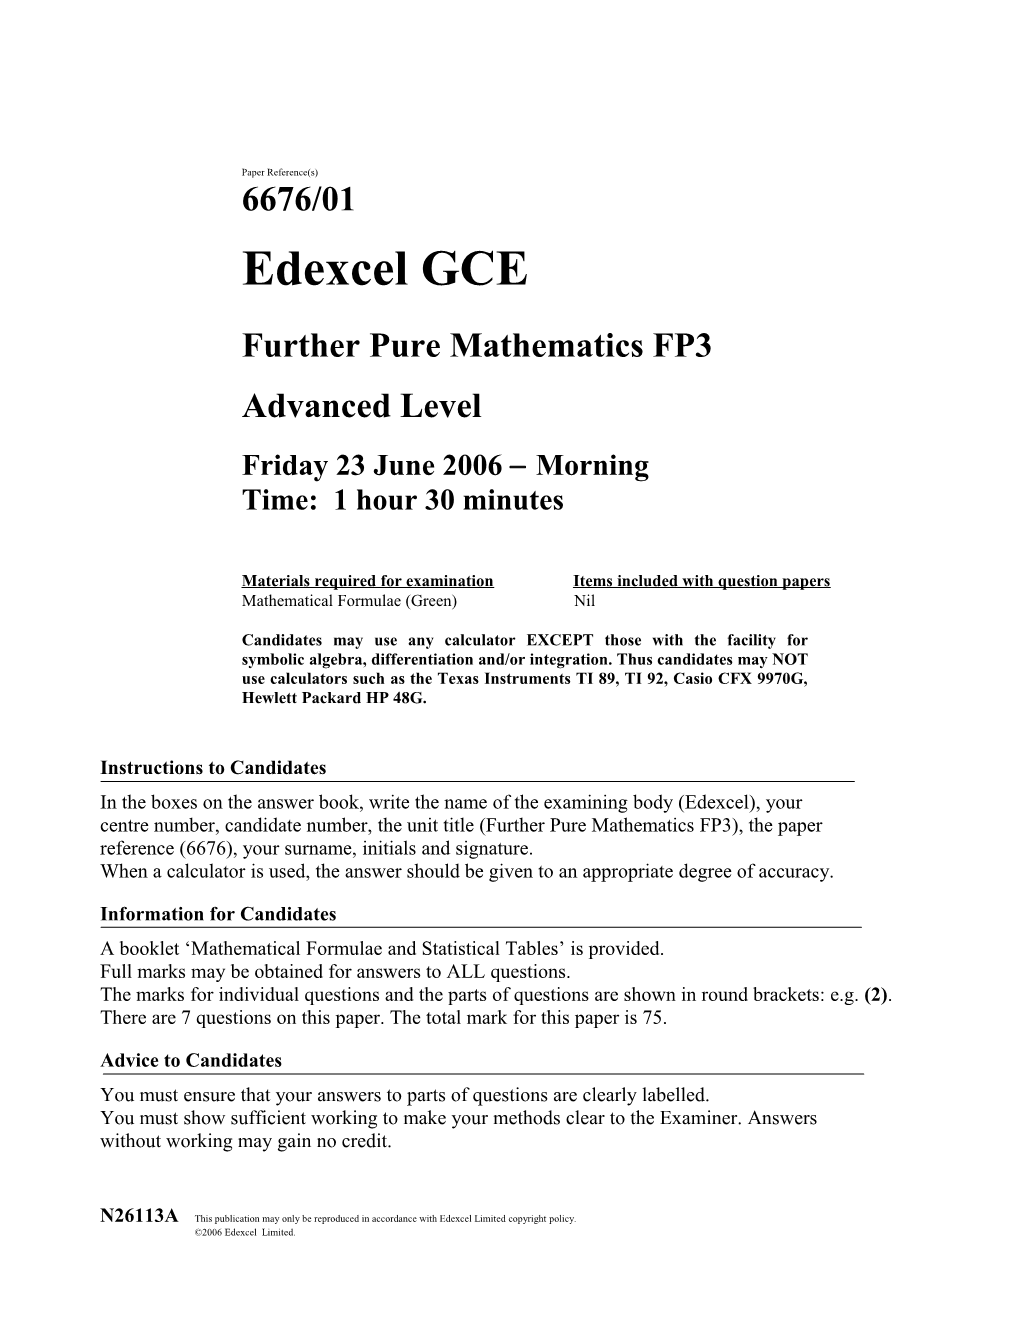 Further Pure Mathematics FP3